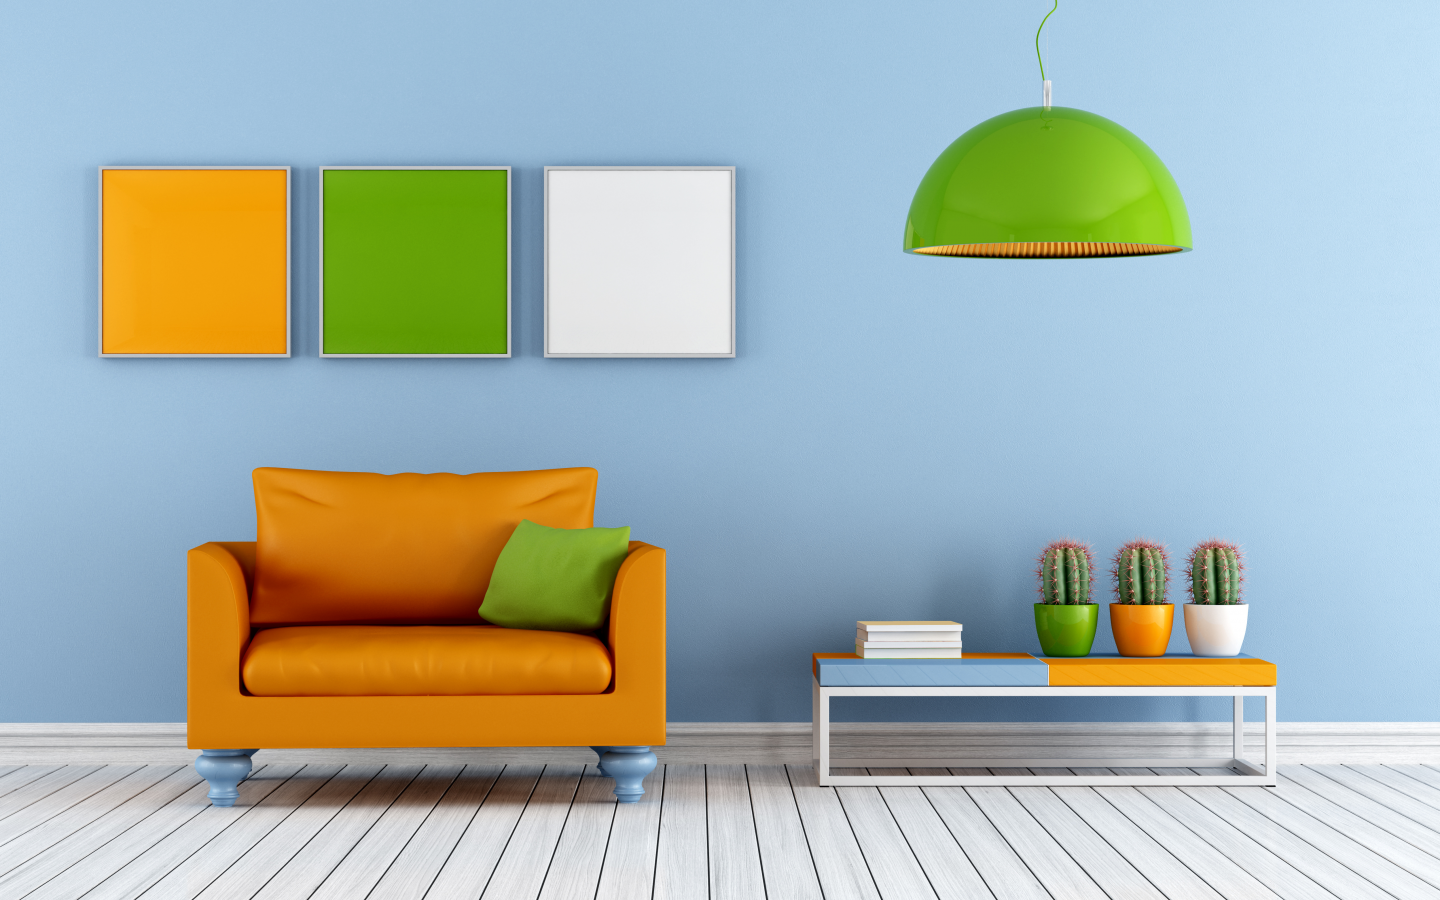 interior, стильный дизайн, stylish design, интерьер, couch, colorful lounge